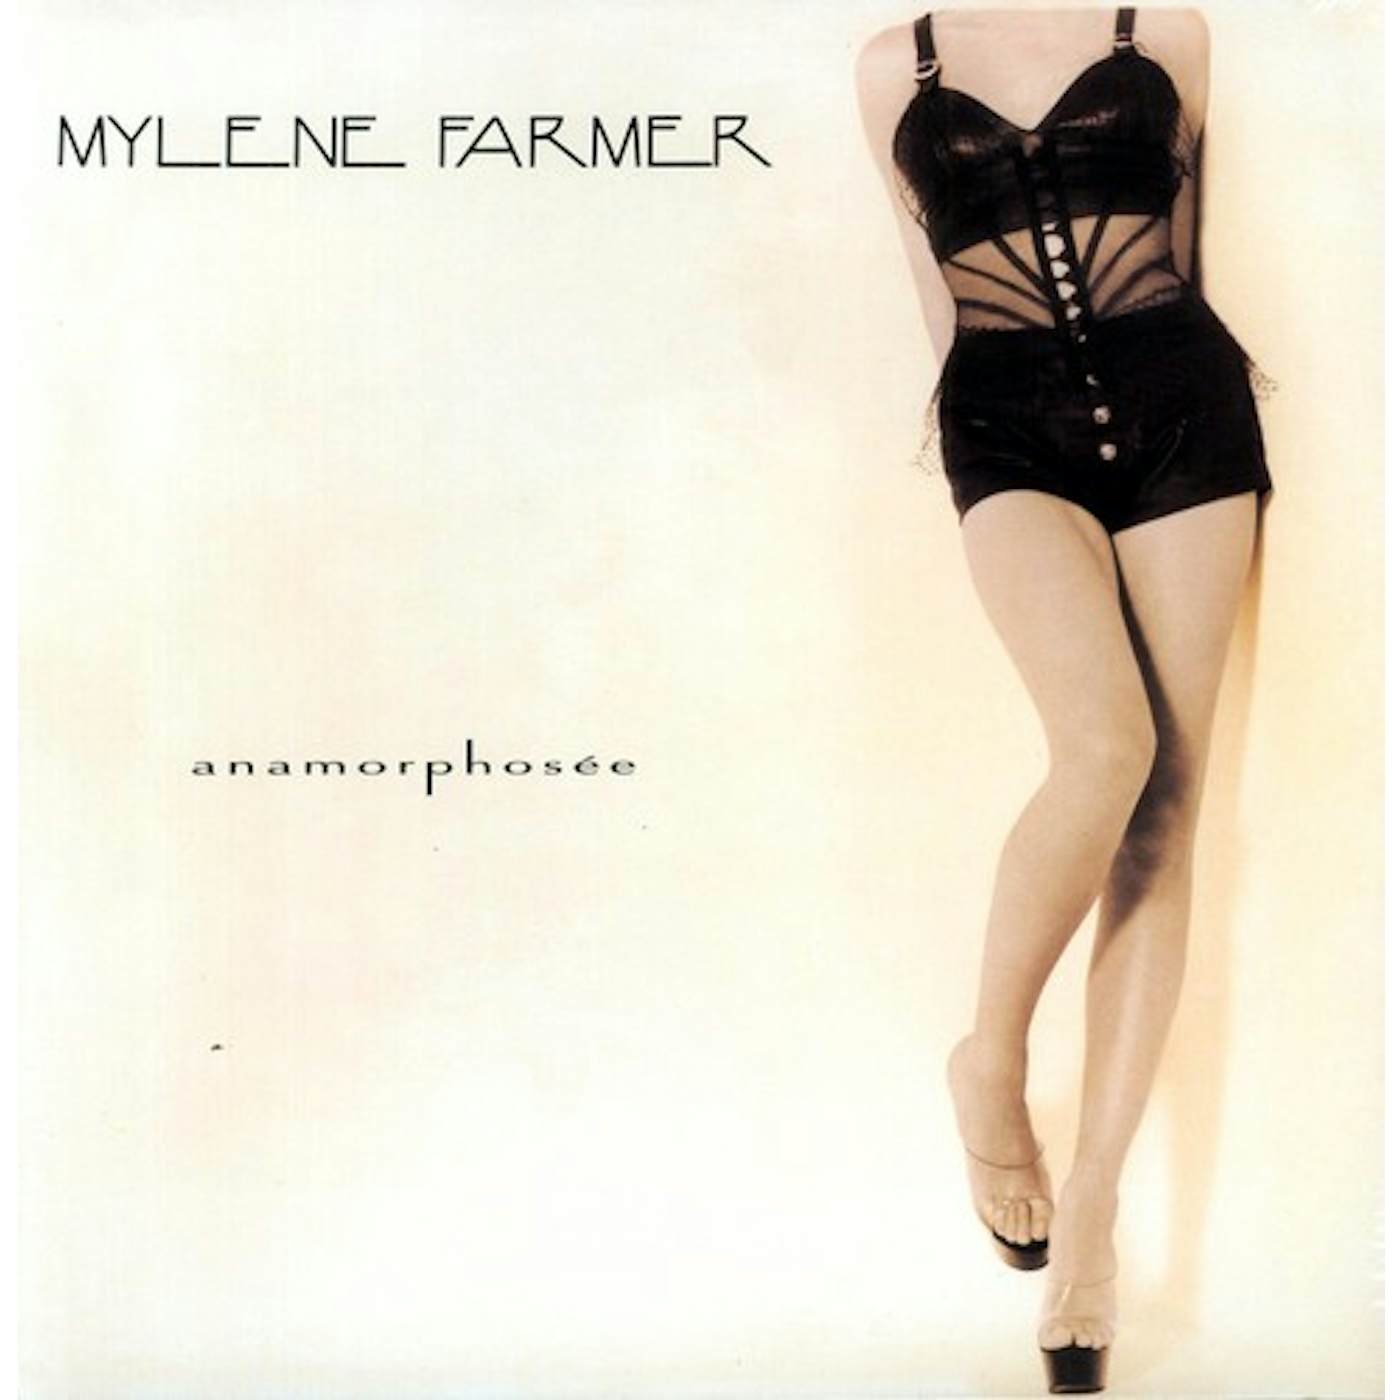 Mylène Farmer Anamorphosee Vinyl Record